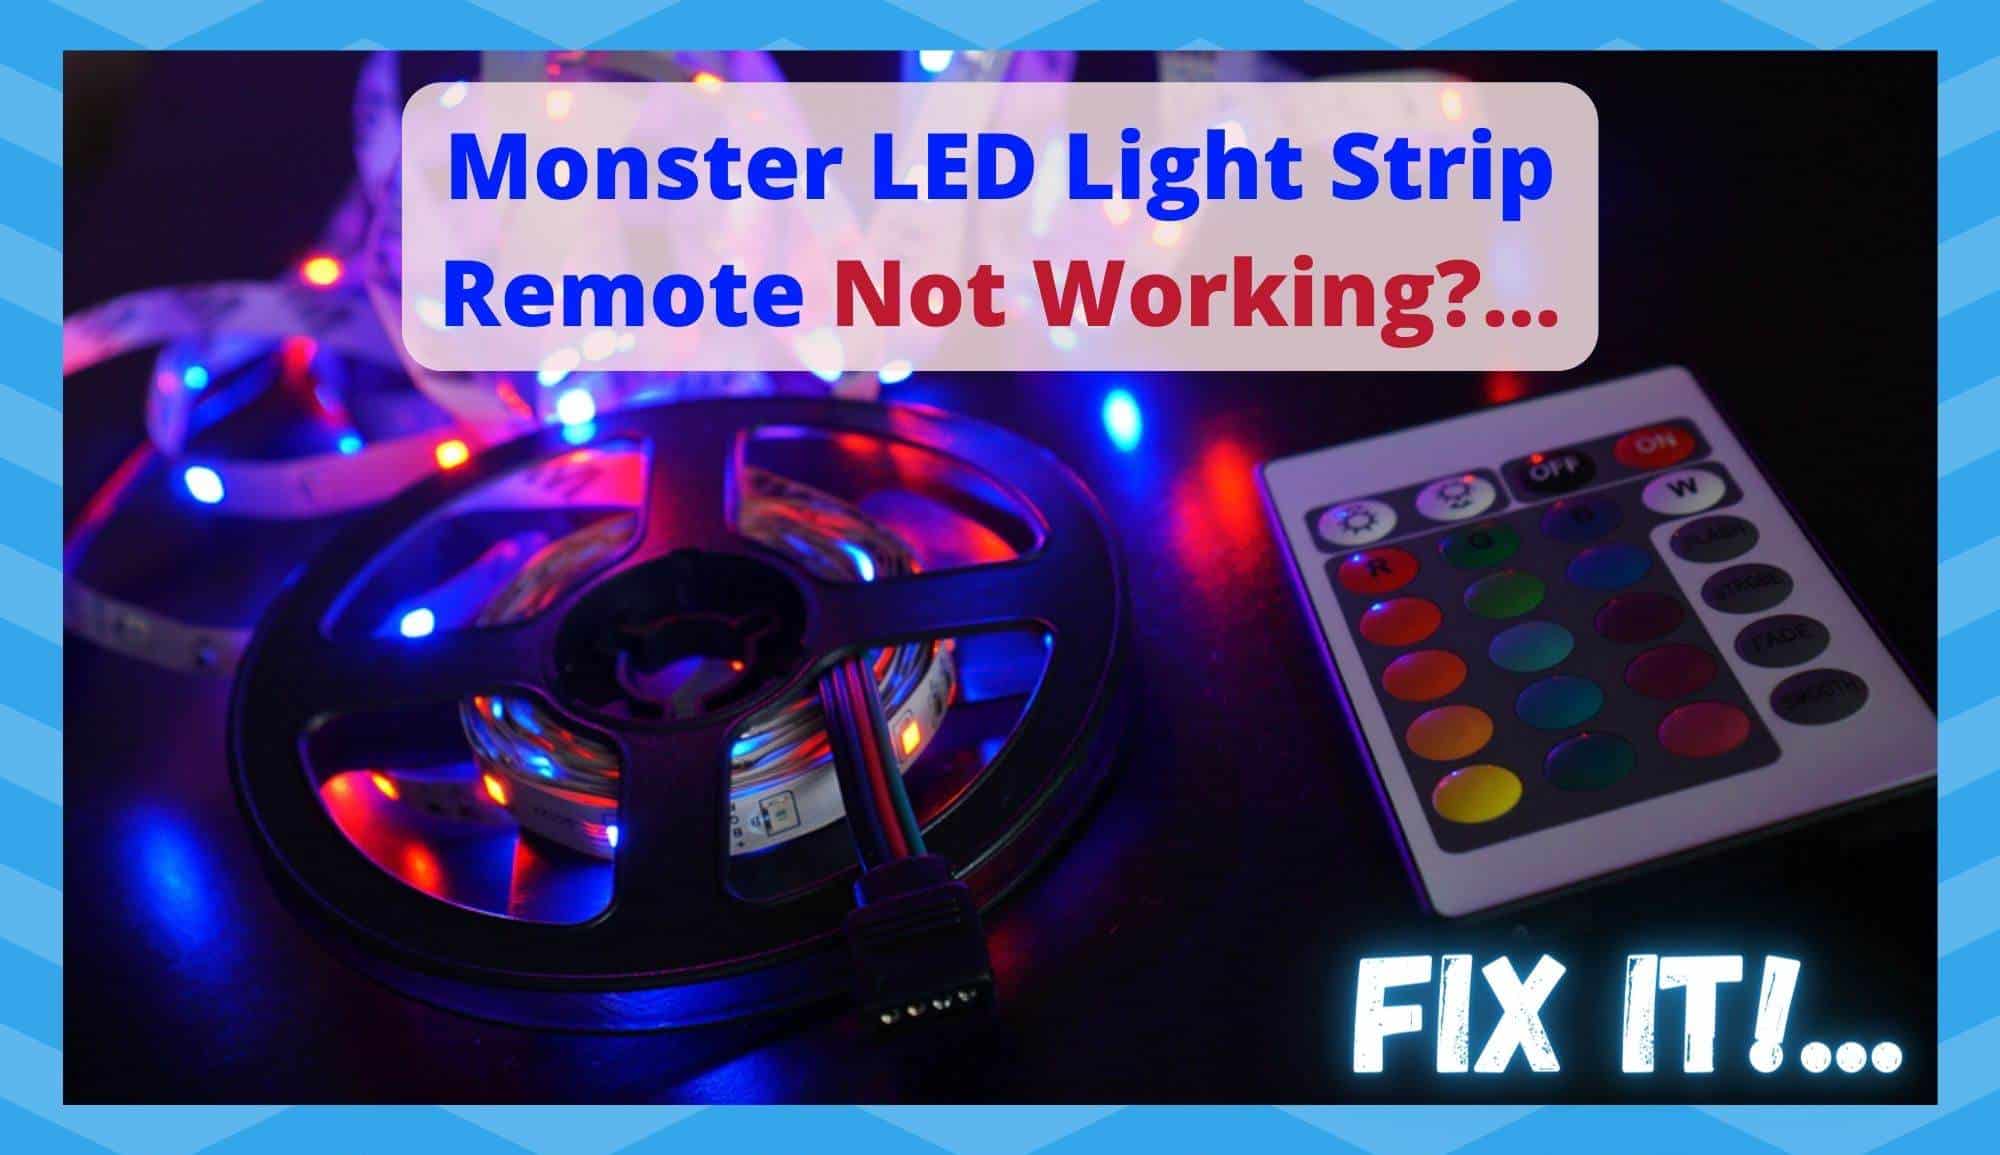 https://www.diysmarthomehub.com/wp-content/uploads/2021/04/monster-led-light-strip-remote-not_working.jpg